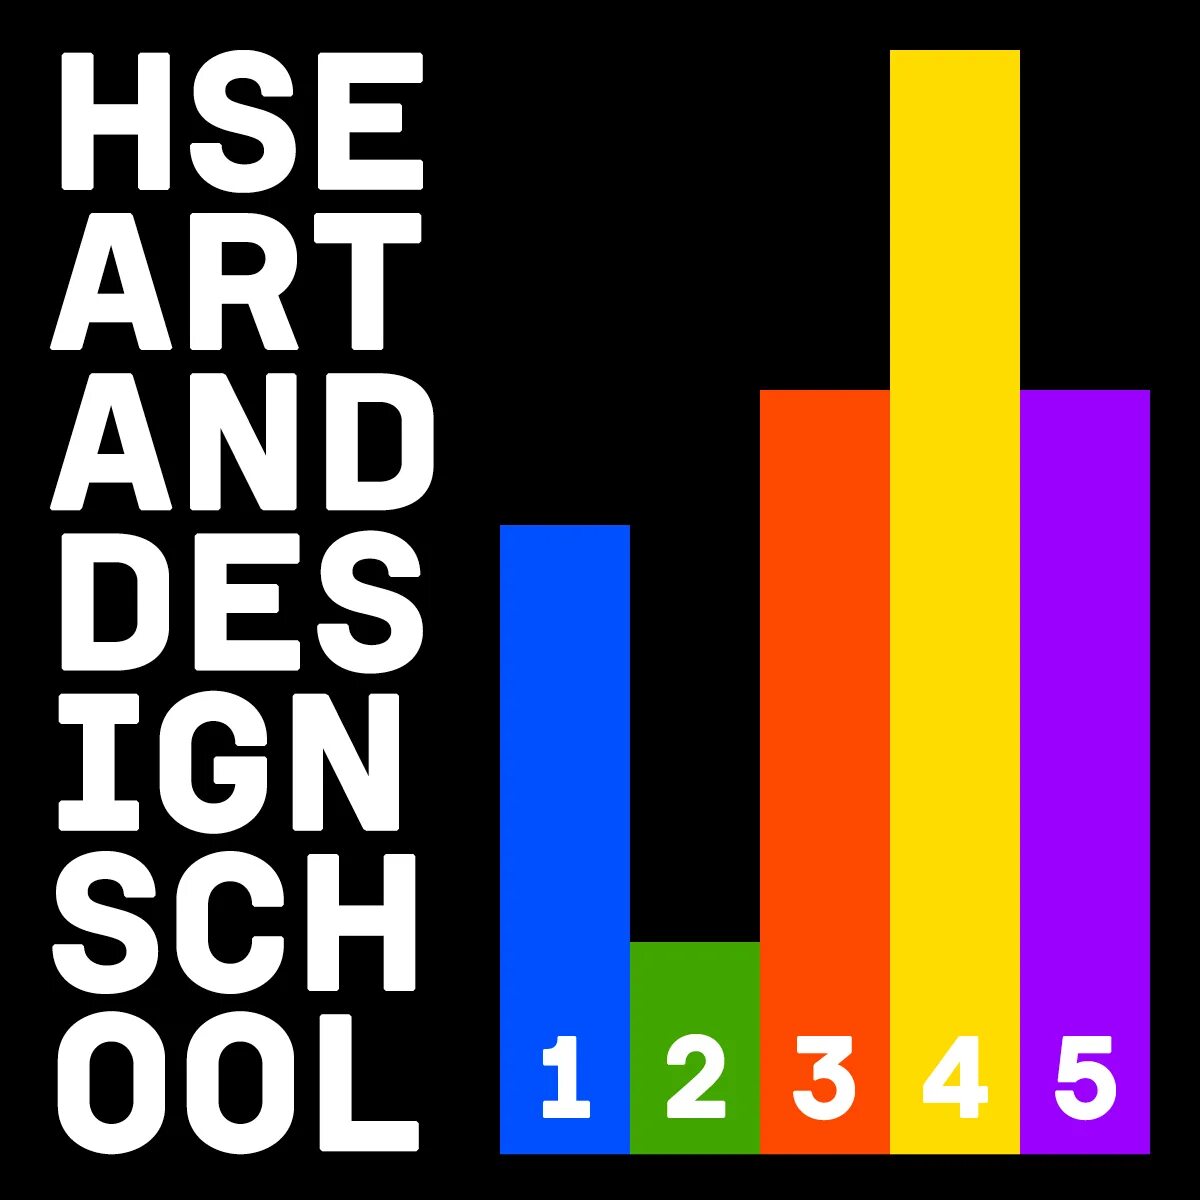 HSE Art. Школа дизайна ВШЭ логотип. HSE Art and Design School logo. HSE Art and Design School. Hse art and design